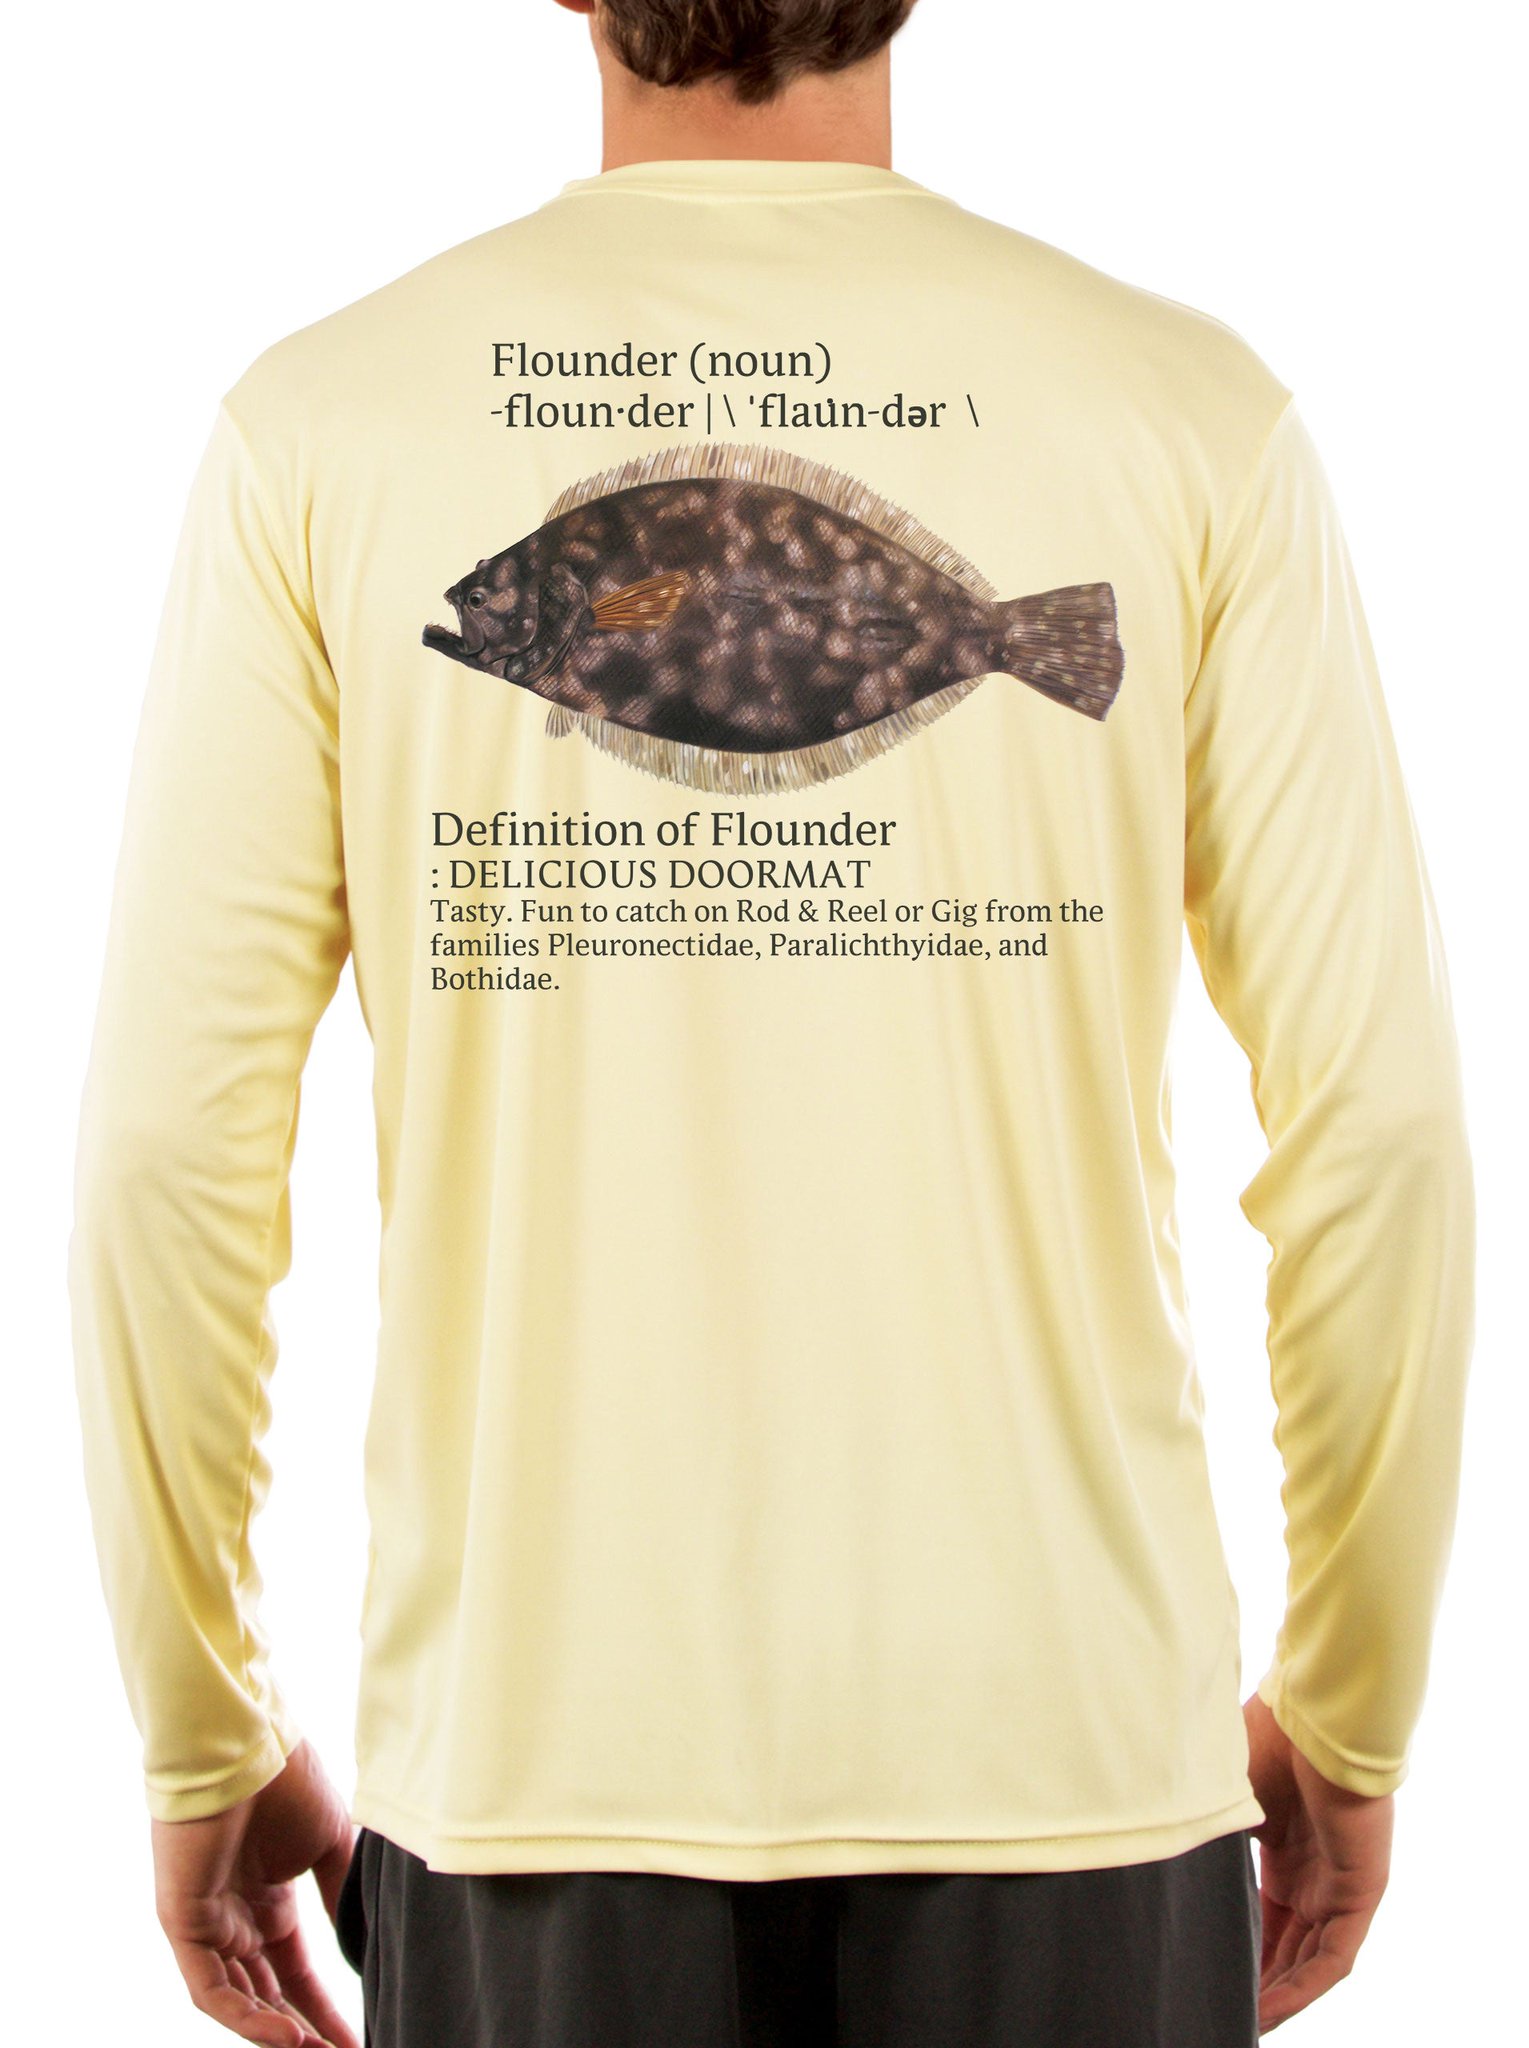 Skiff Life on X: Flounder Fishing Shirts for Men Fluke - UV Protected +50  Sun Protection with Moisture Wicking Technology  # SkiffLife #Fishing #<---TapTheLink  / X